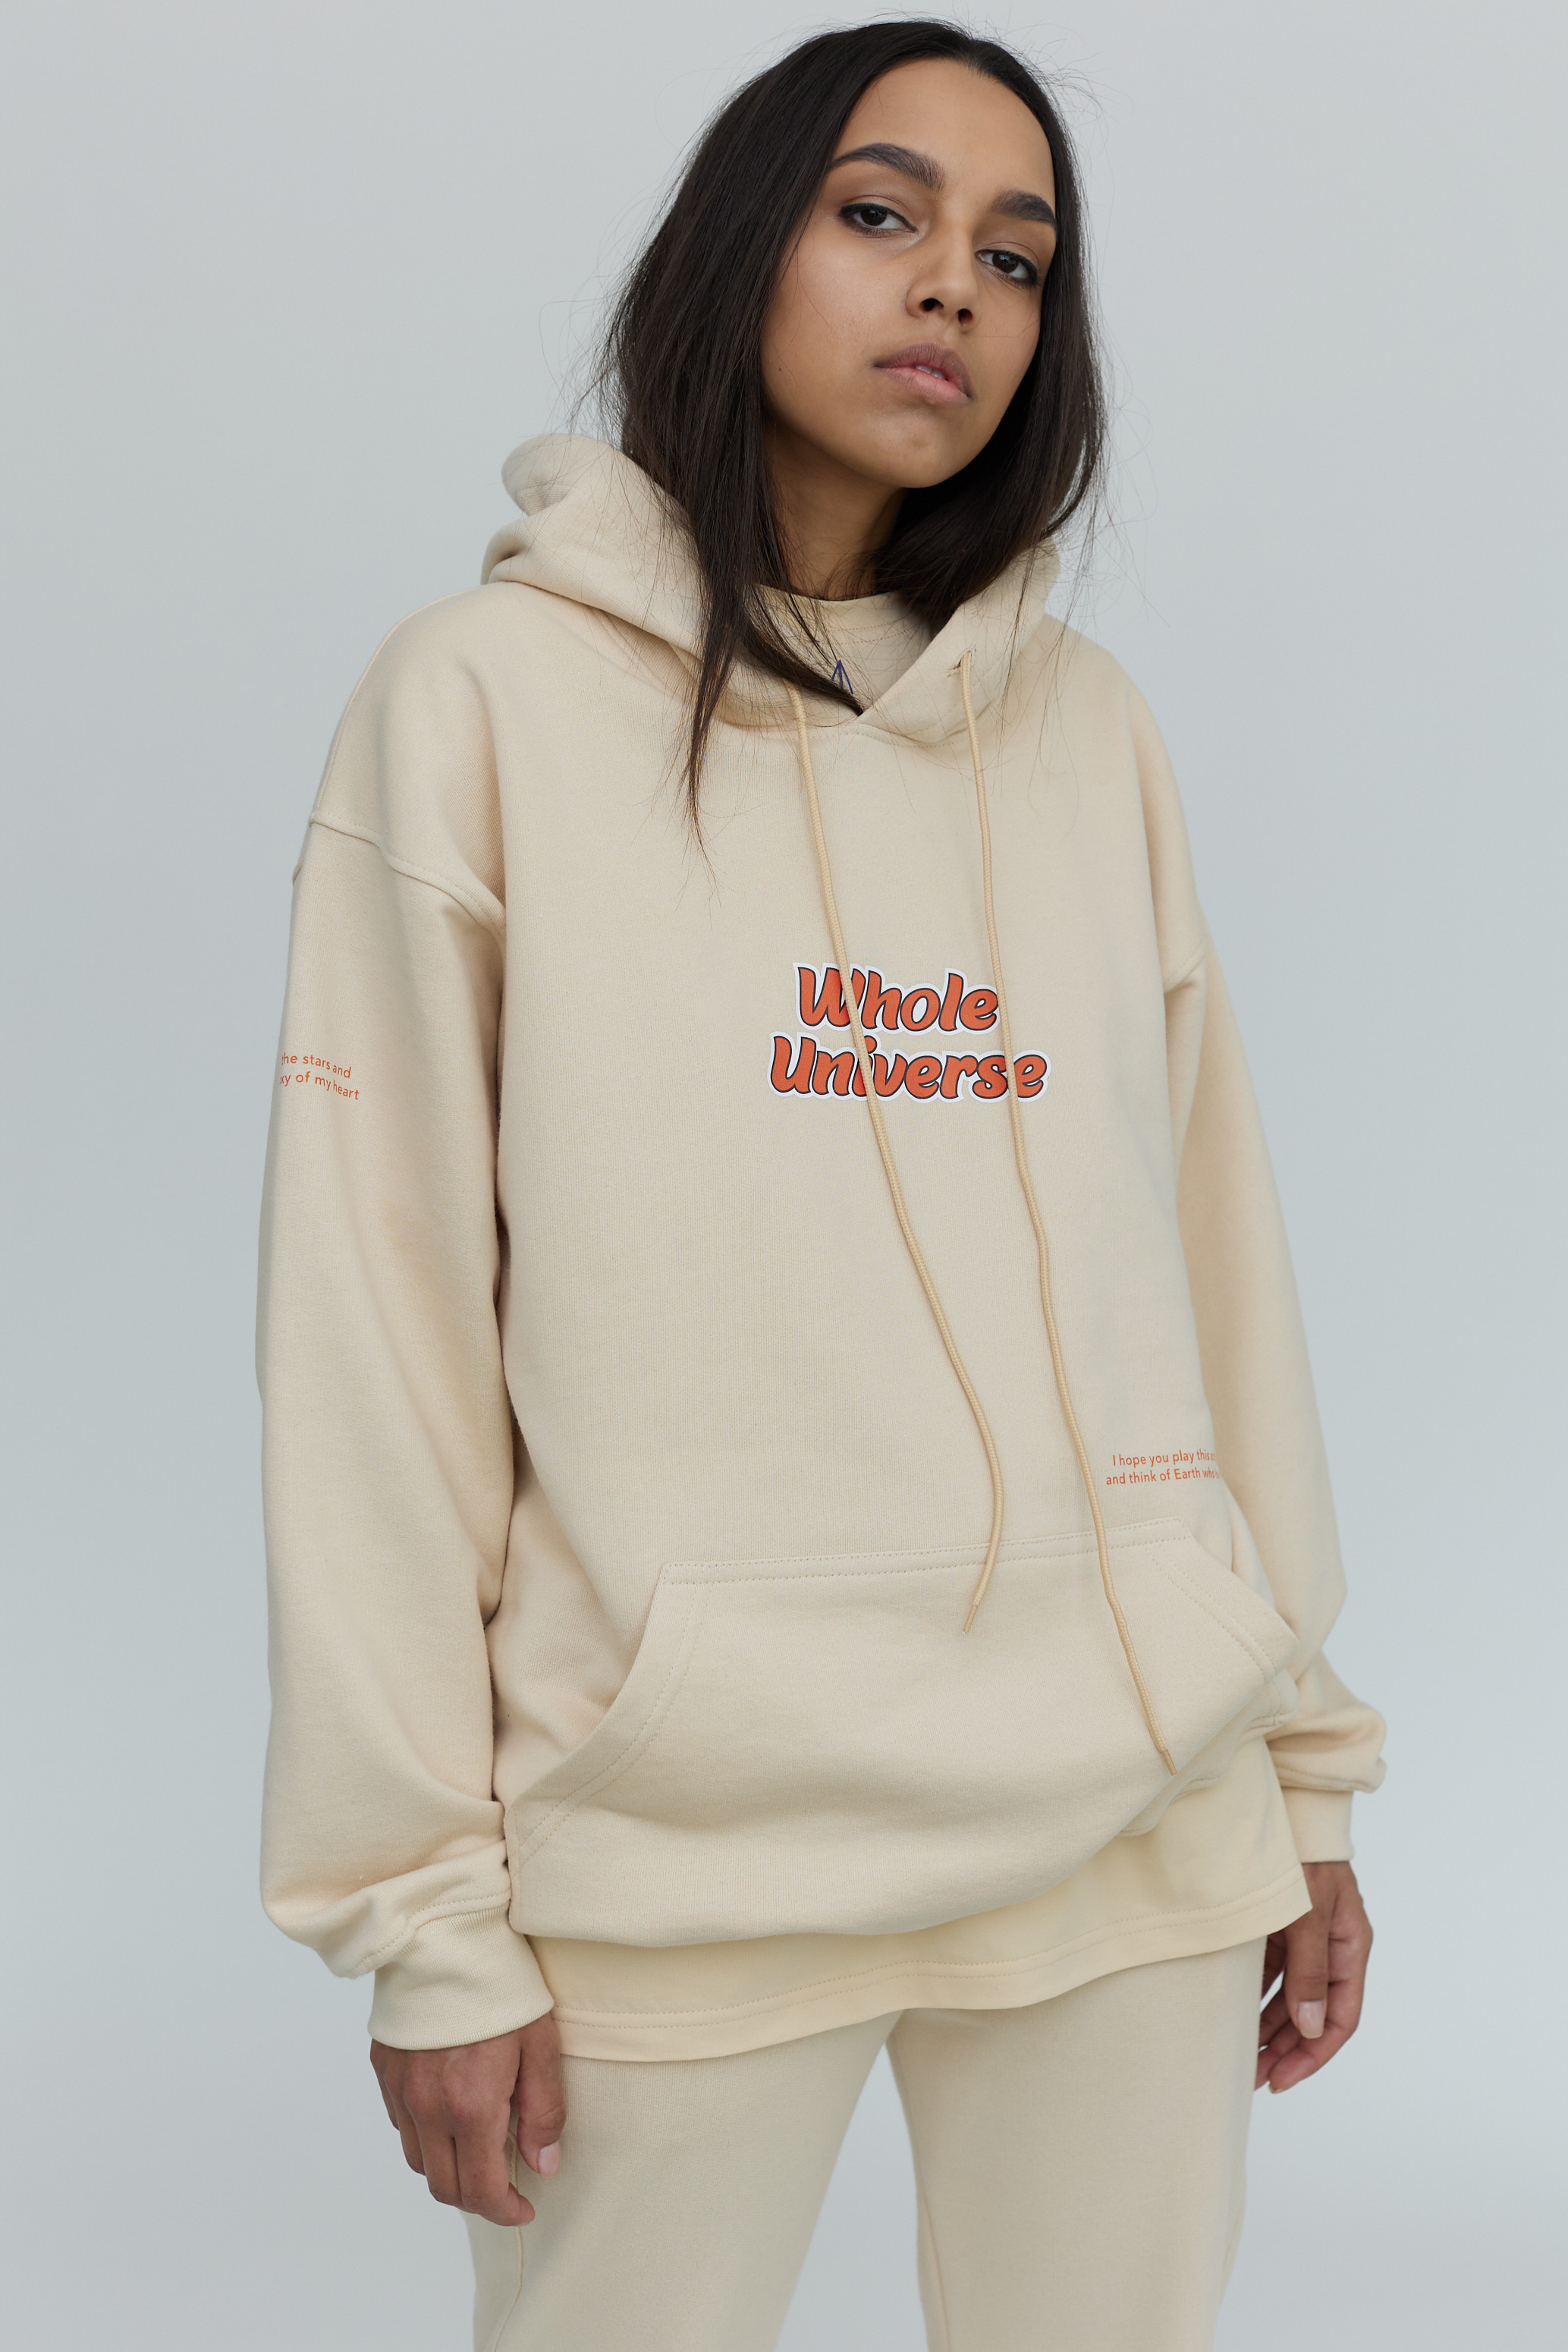 universe hoodie in cream